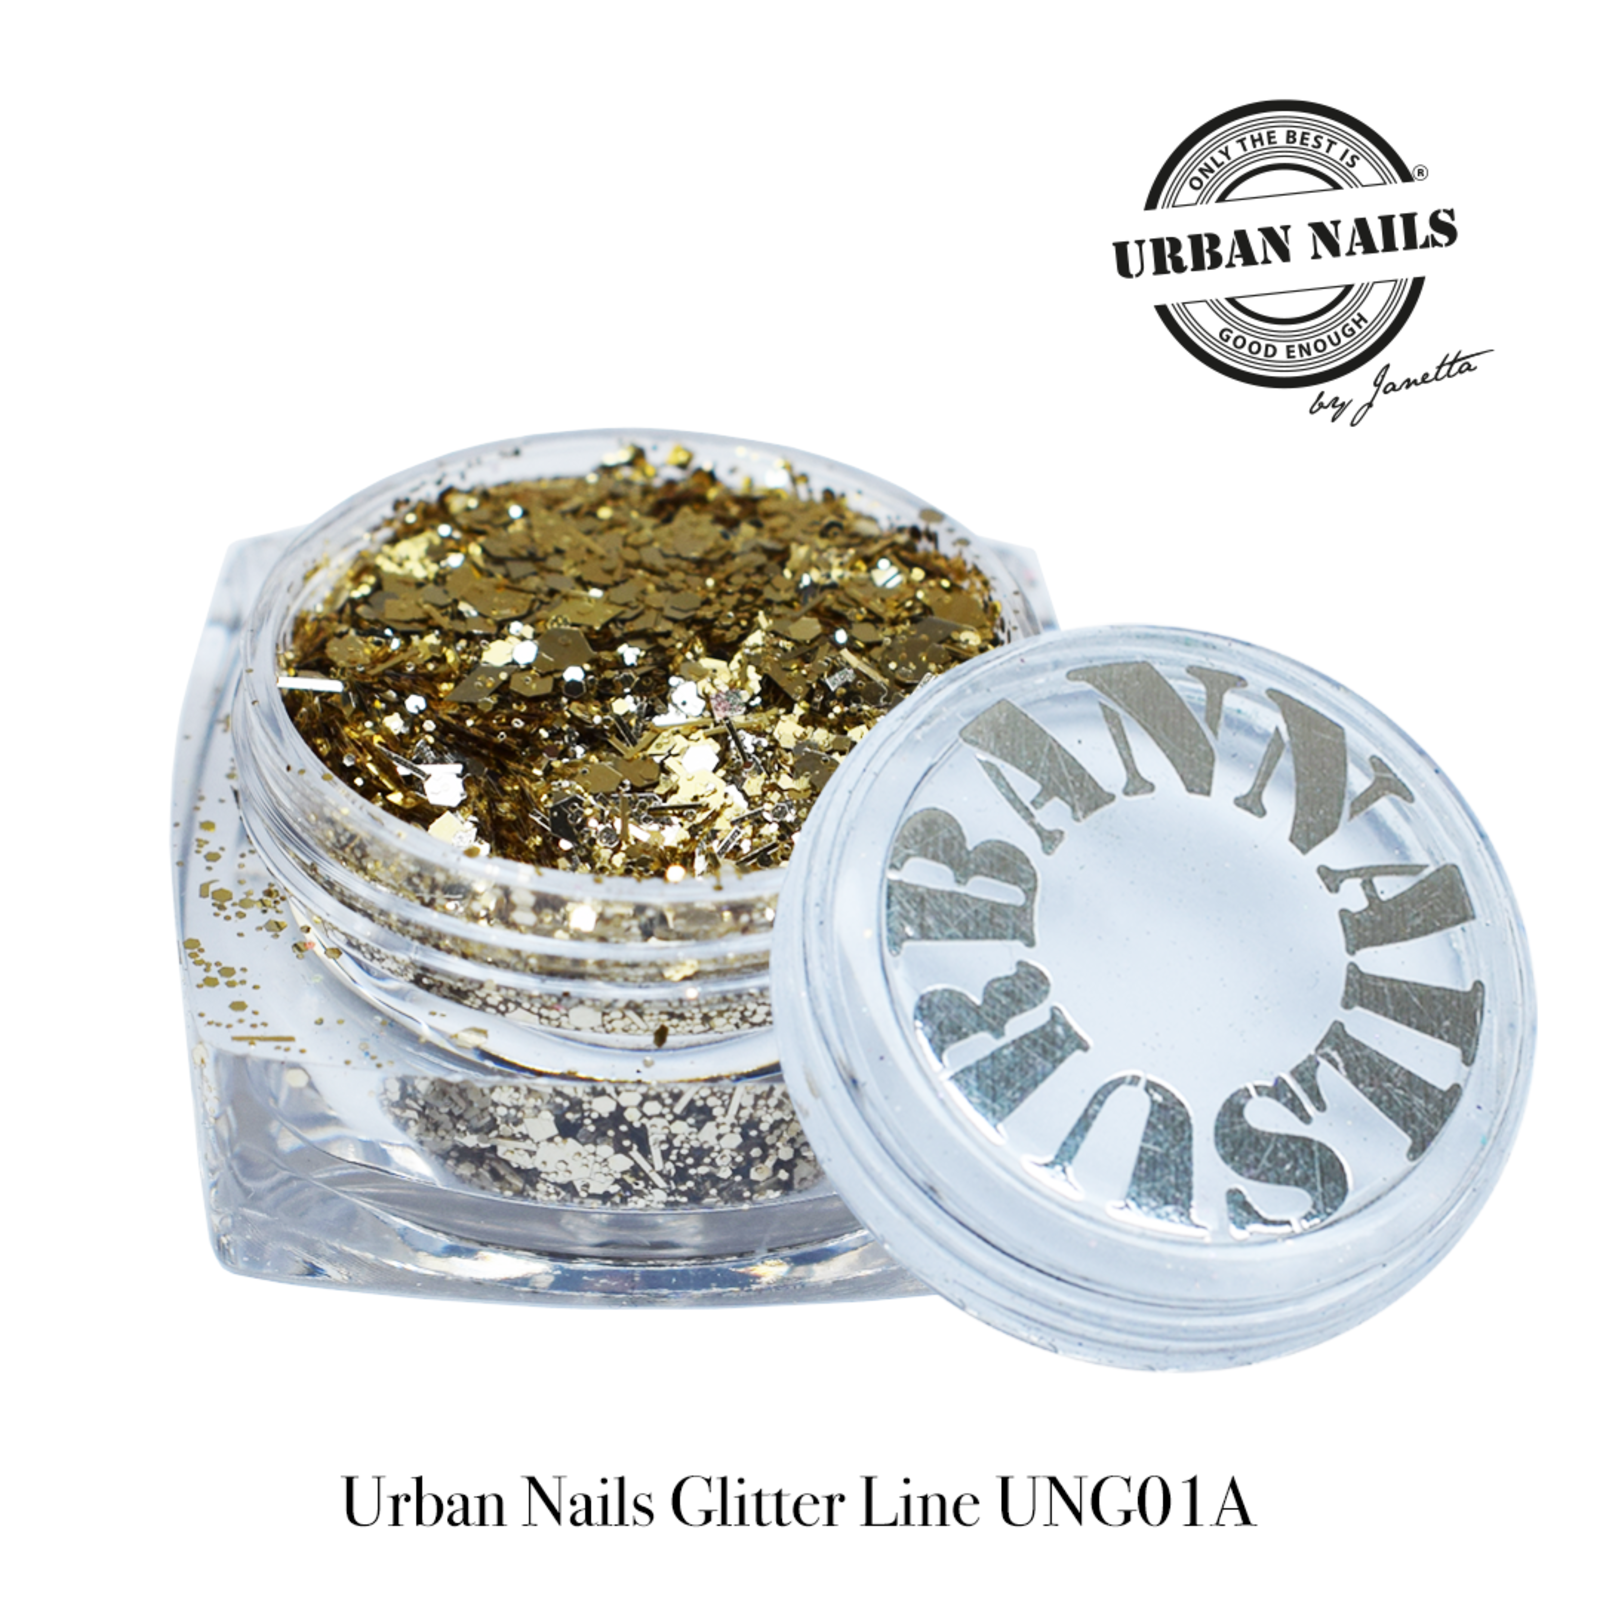 Urban nails Glitter Line UNG01-A